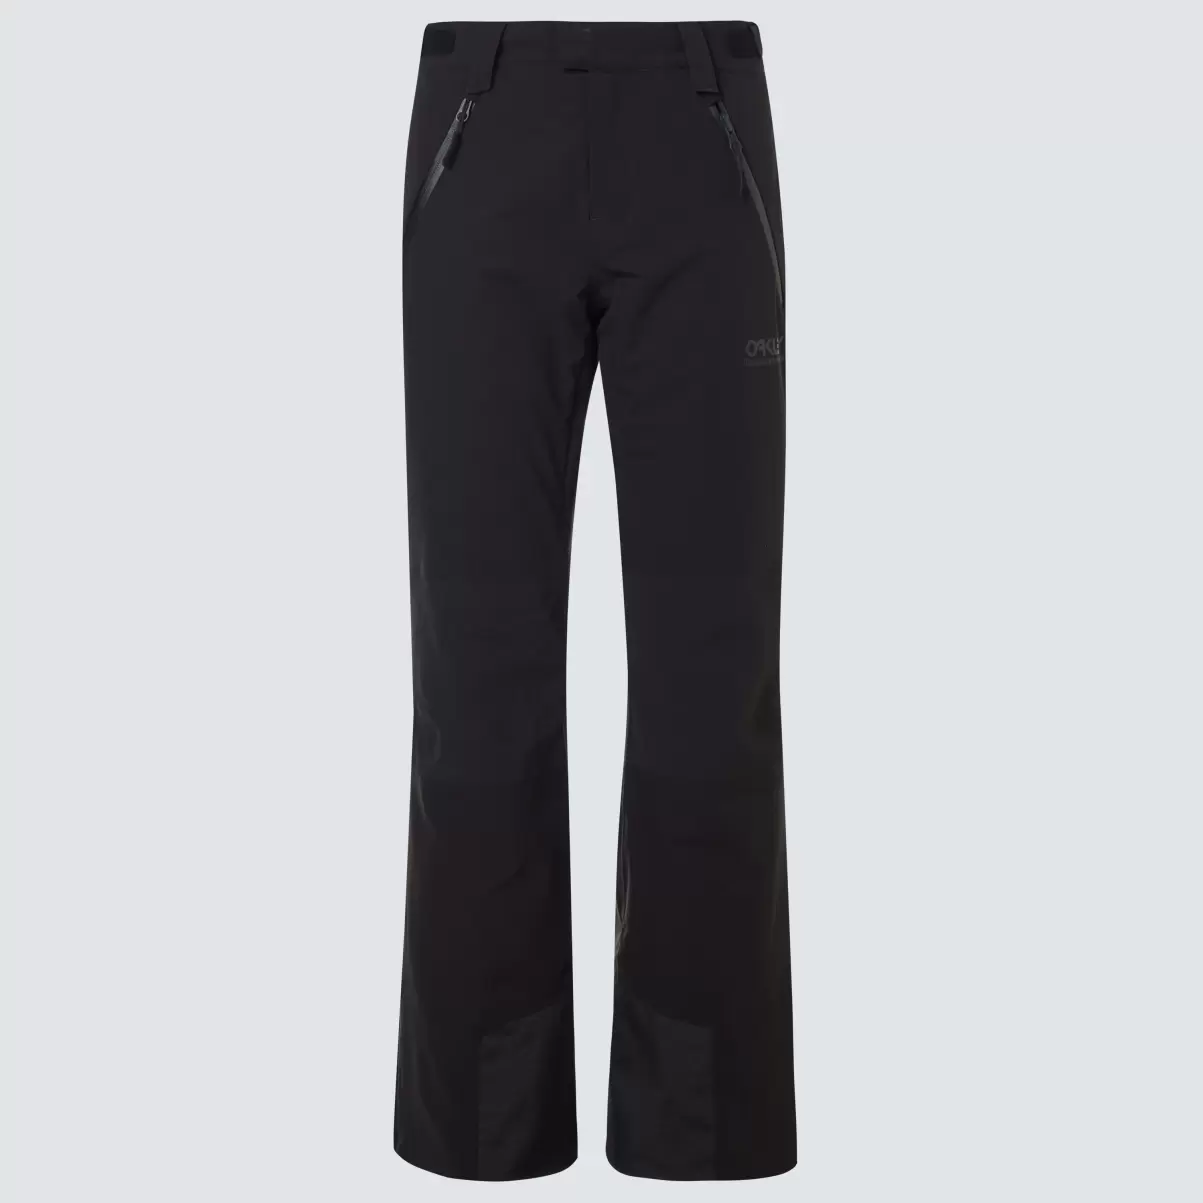 Blackout Tnp Women's Insulated Pant Pants Oakley Men - 2